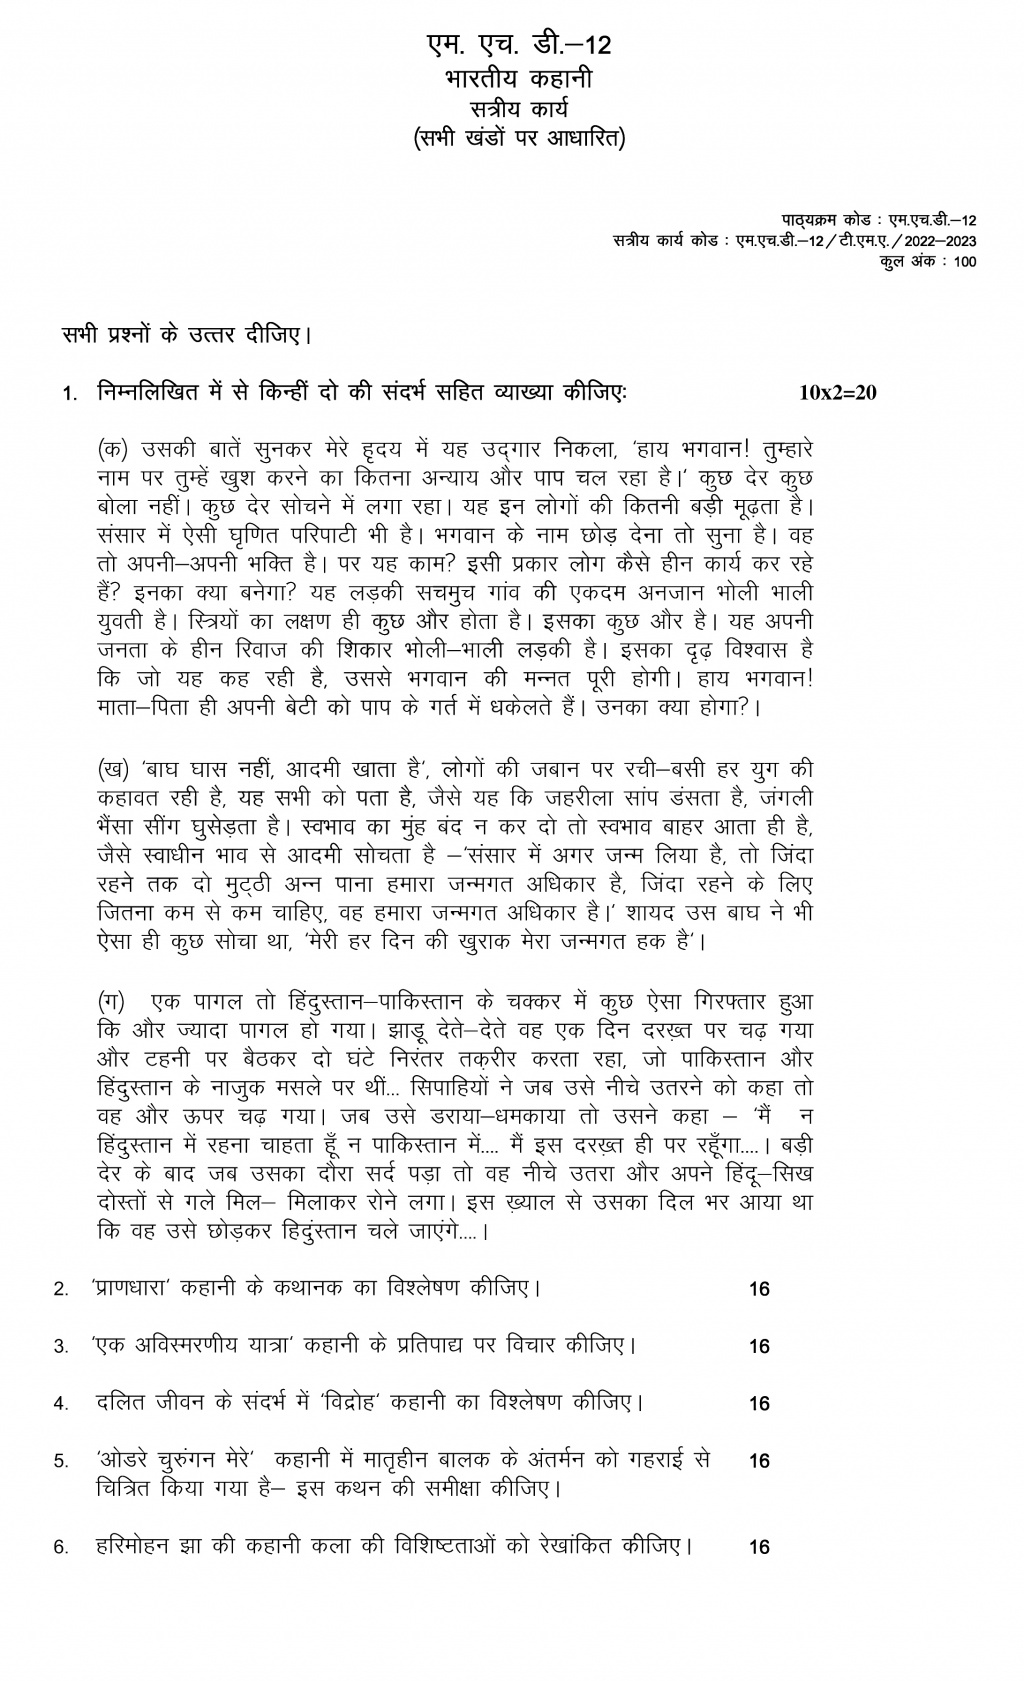 IGNOU MHD-12 - Bhartiya Kahaani, Latest Solved Assignment-July 2022 – January 2023